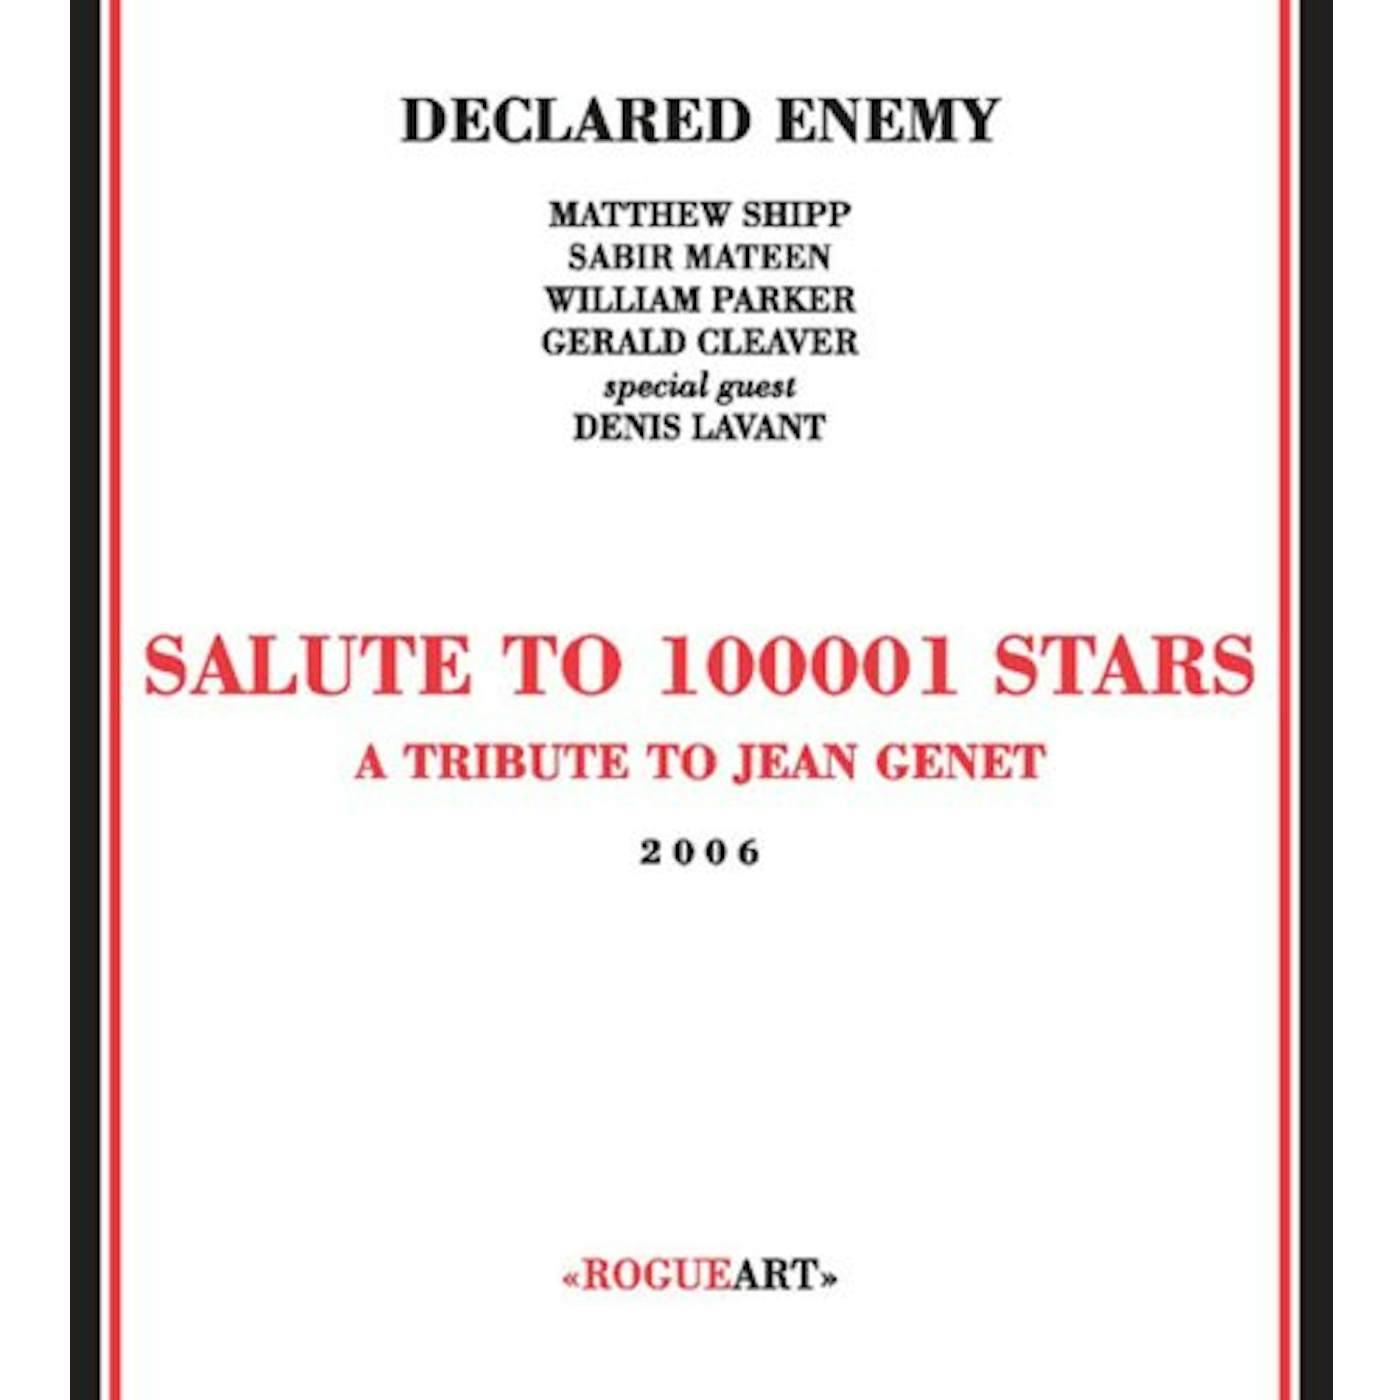 Matthew Shipp DECLARED ENEMY: SALUTE TO 100001 STARS CD